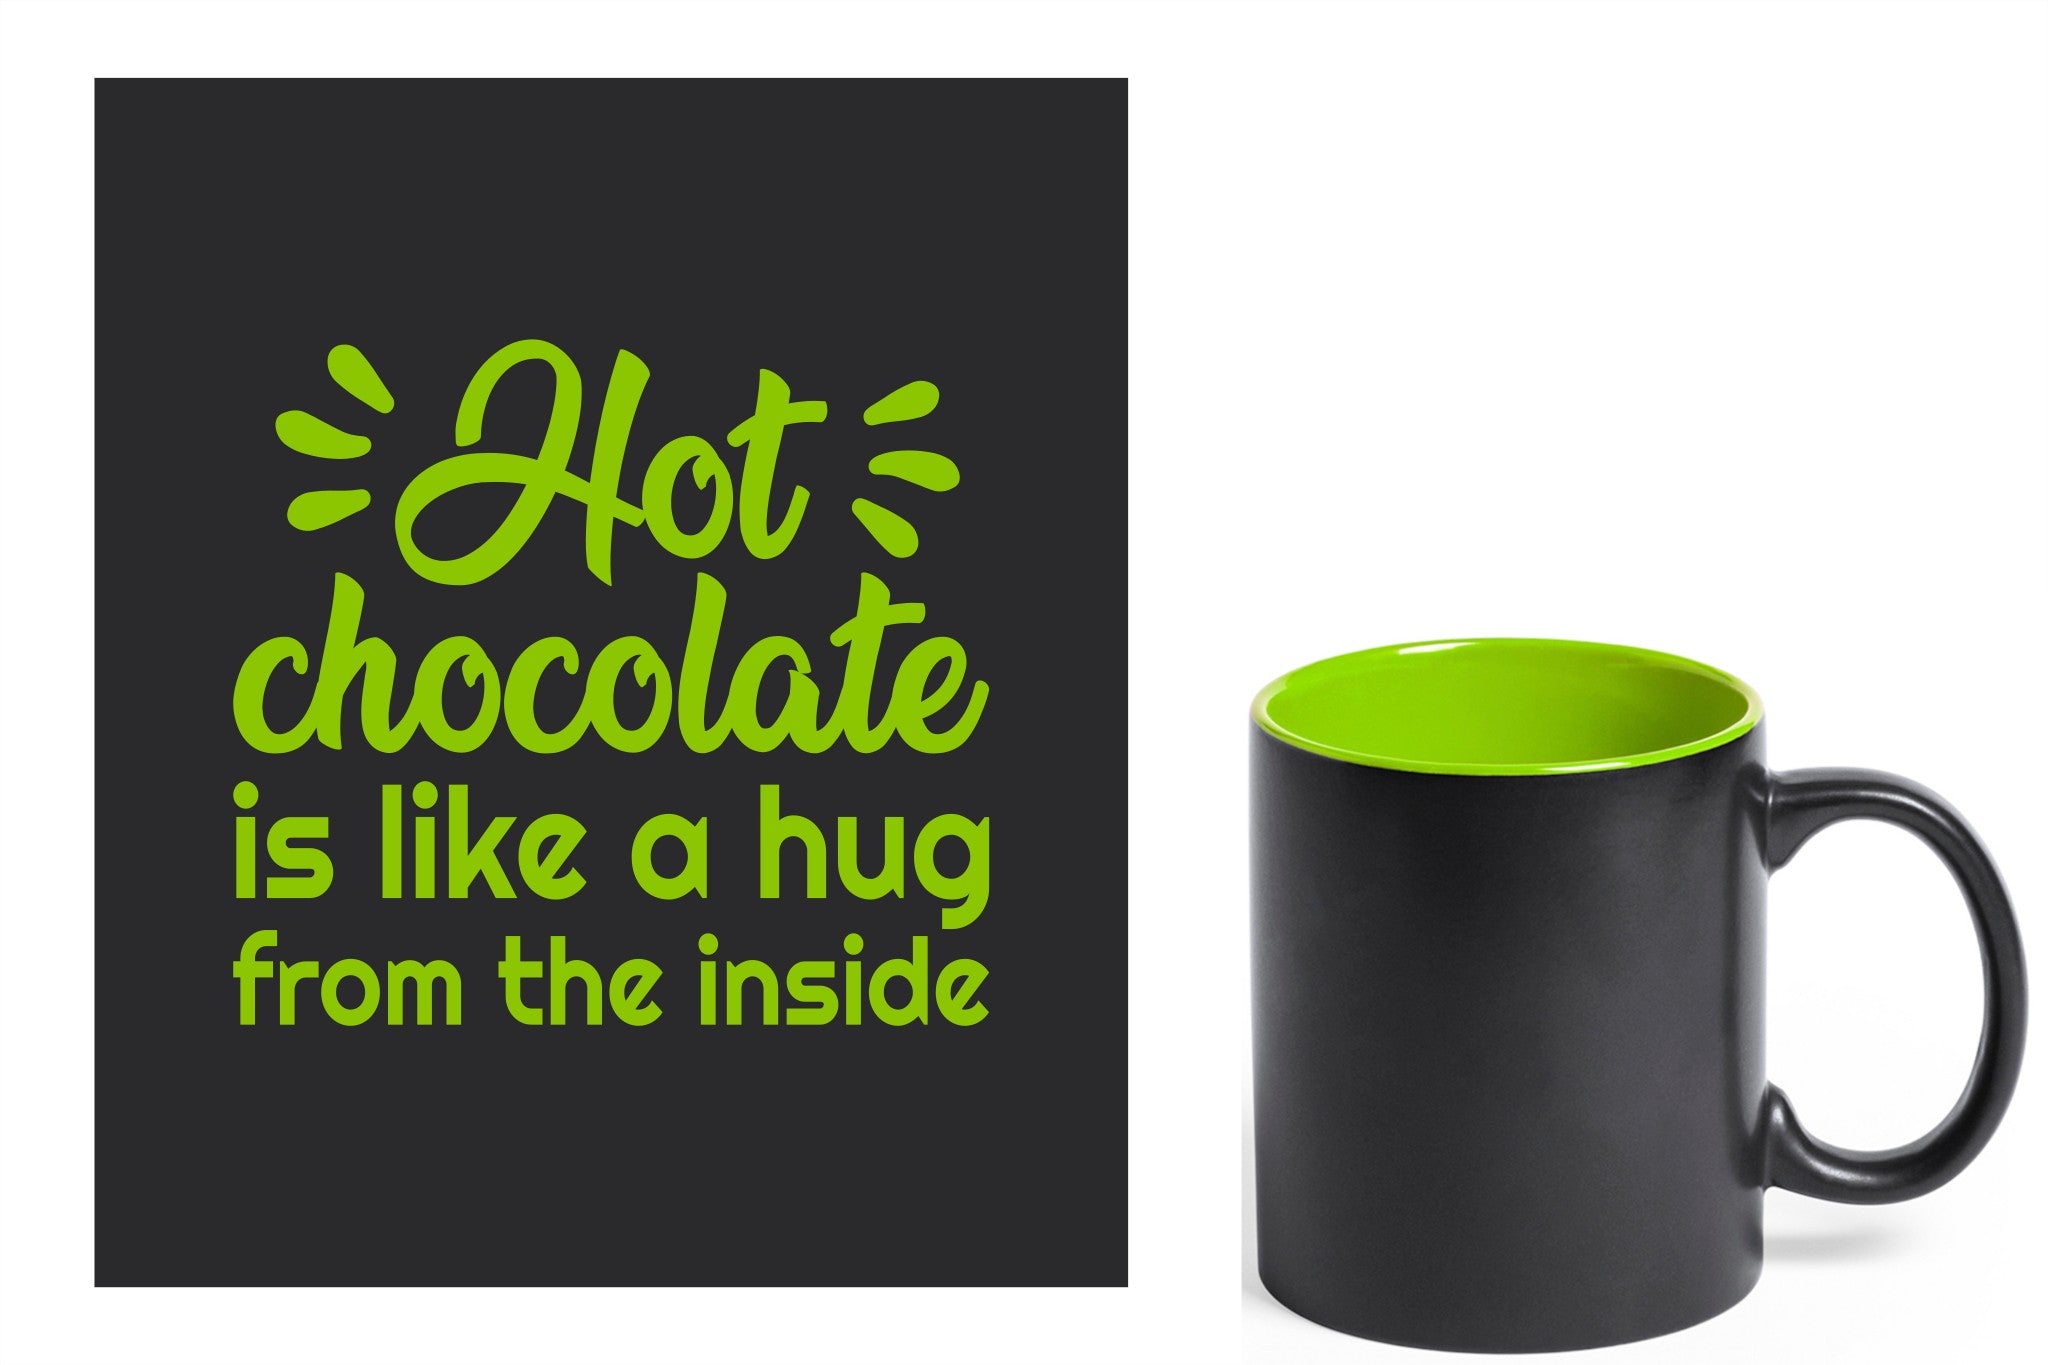 zwarte keramische mok met groene gravure  'Hot chocolate is like a hug from the inside'.